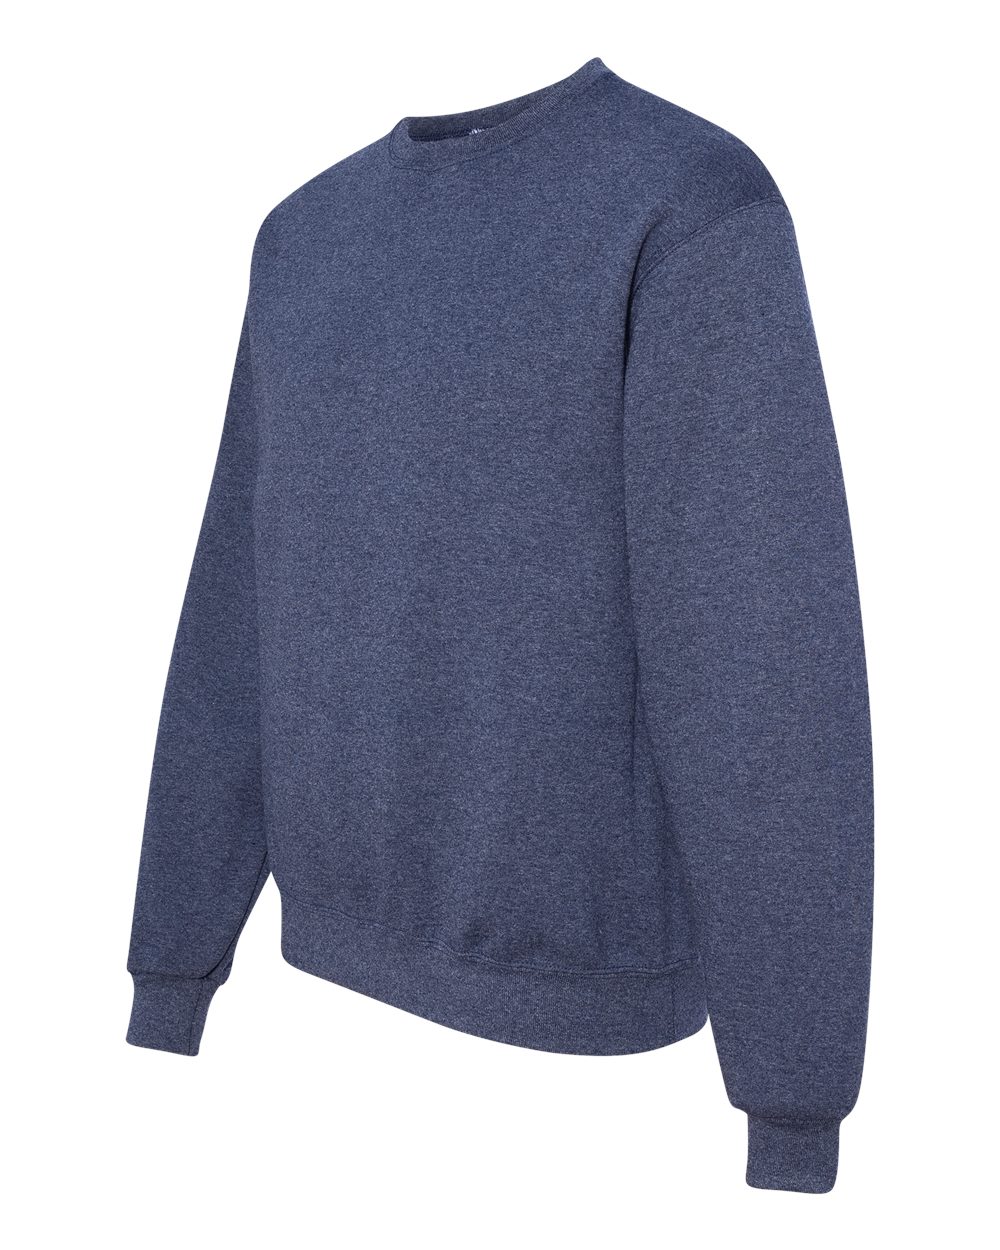 JERZEES 562MR - NuBlend Crewneck Sweatshirt $9.64 - Gifts 10 and Under